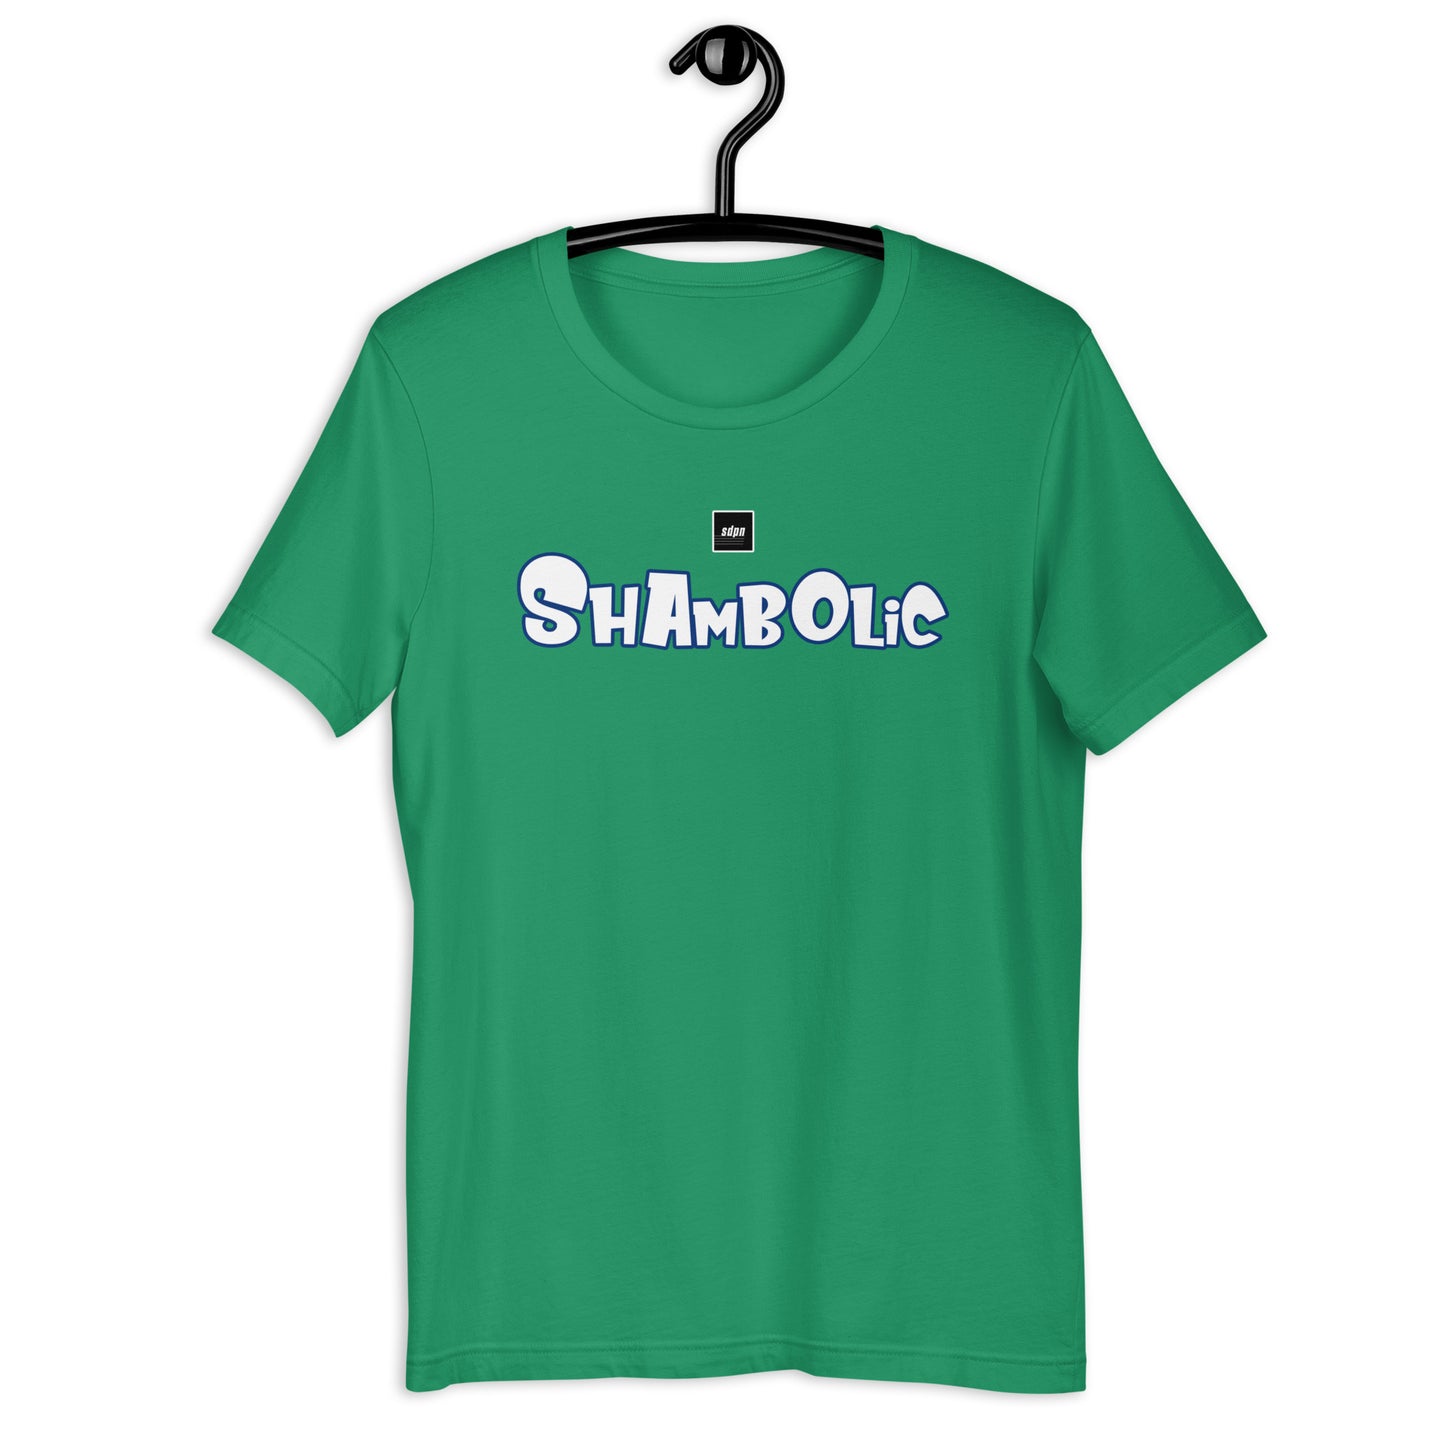 Steve Dangle "Shambolic" T-Shirt